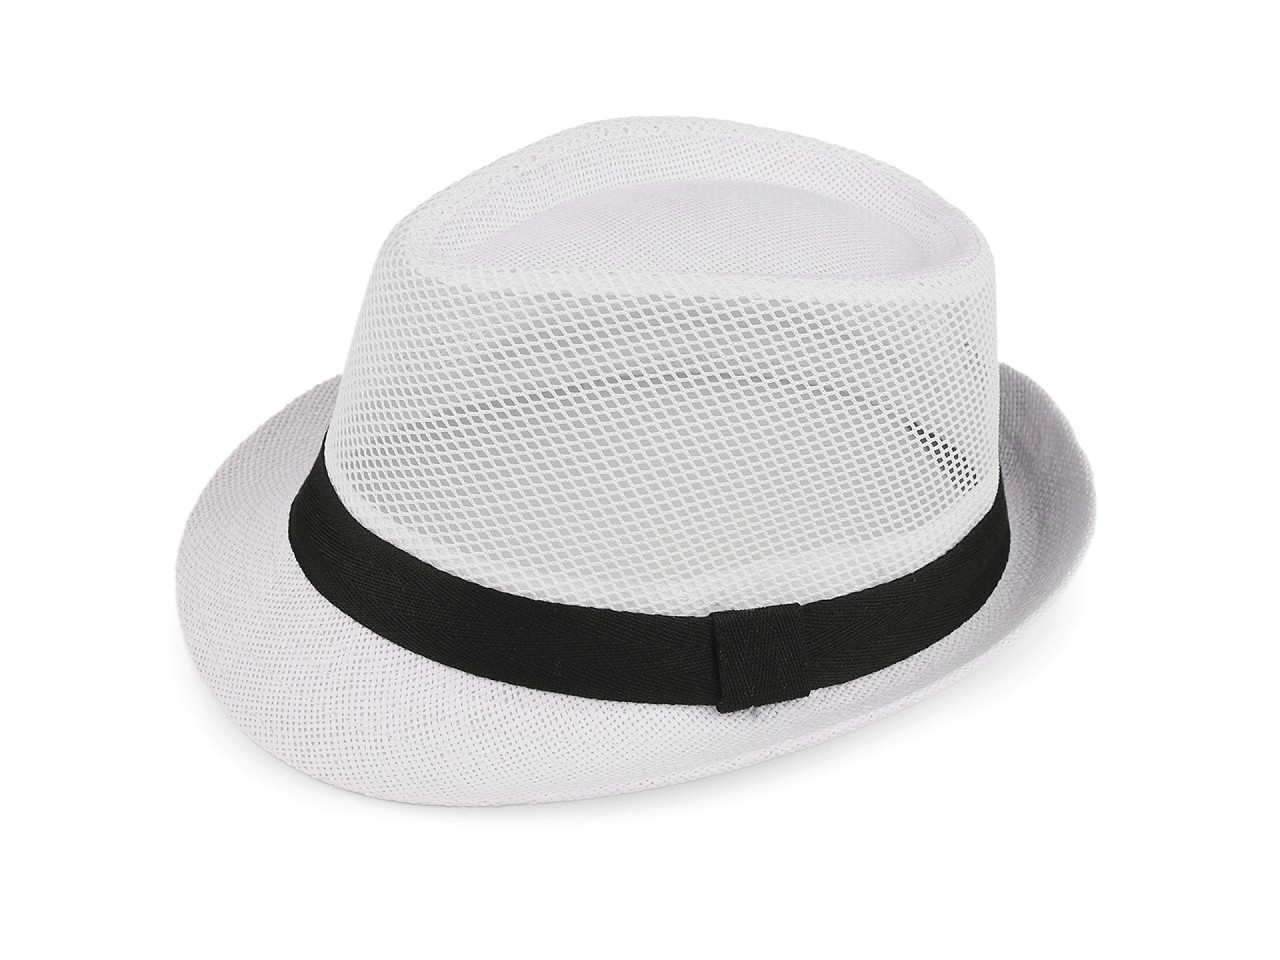 Letní klobouk / slamák unisex, barva 9 bílá